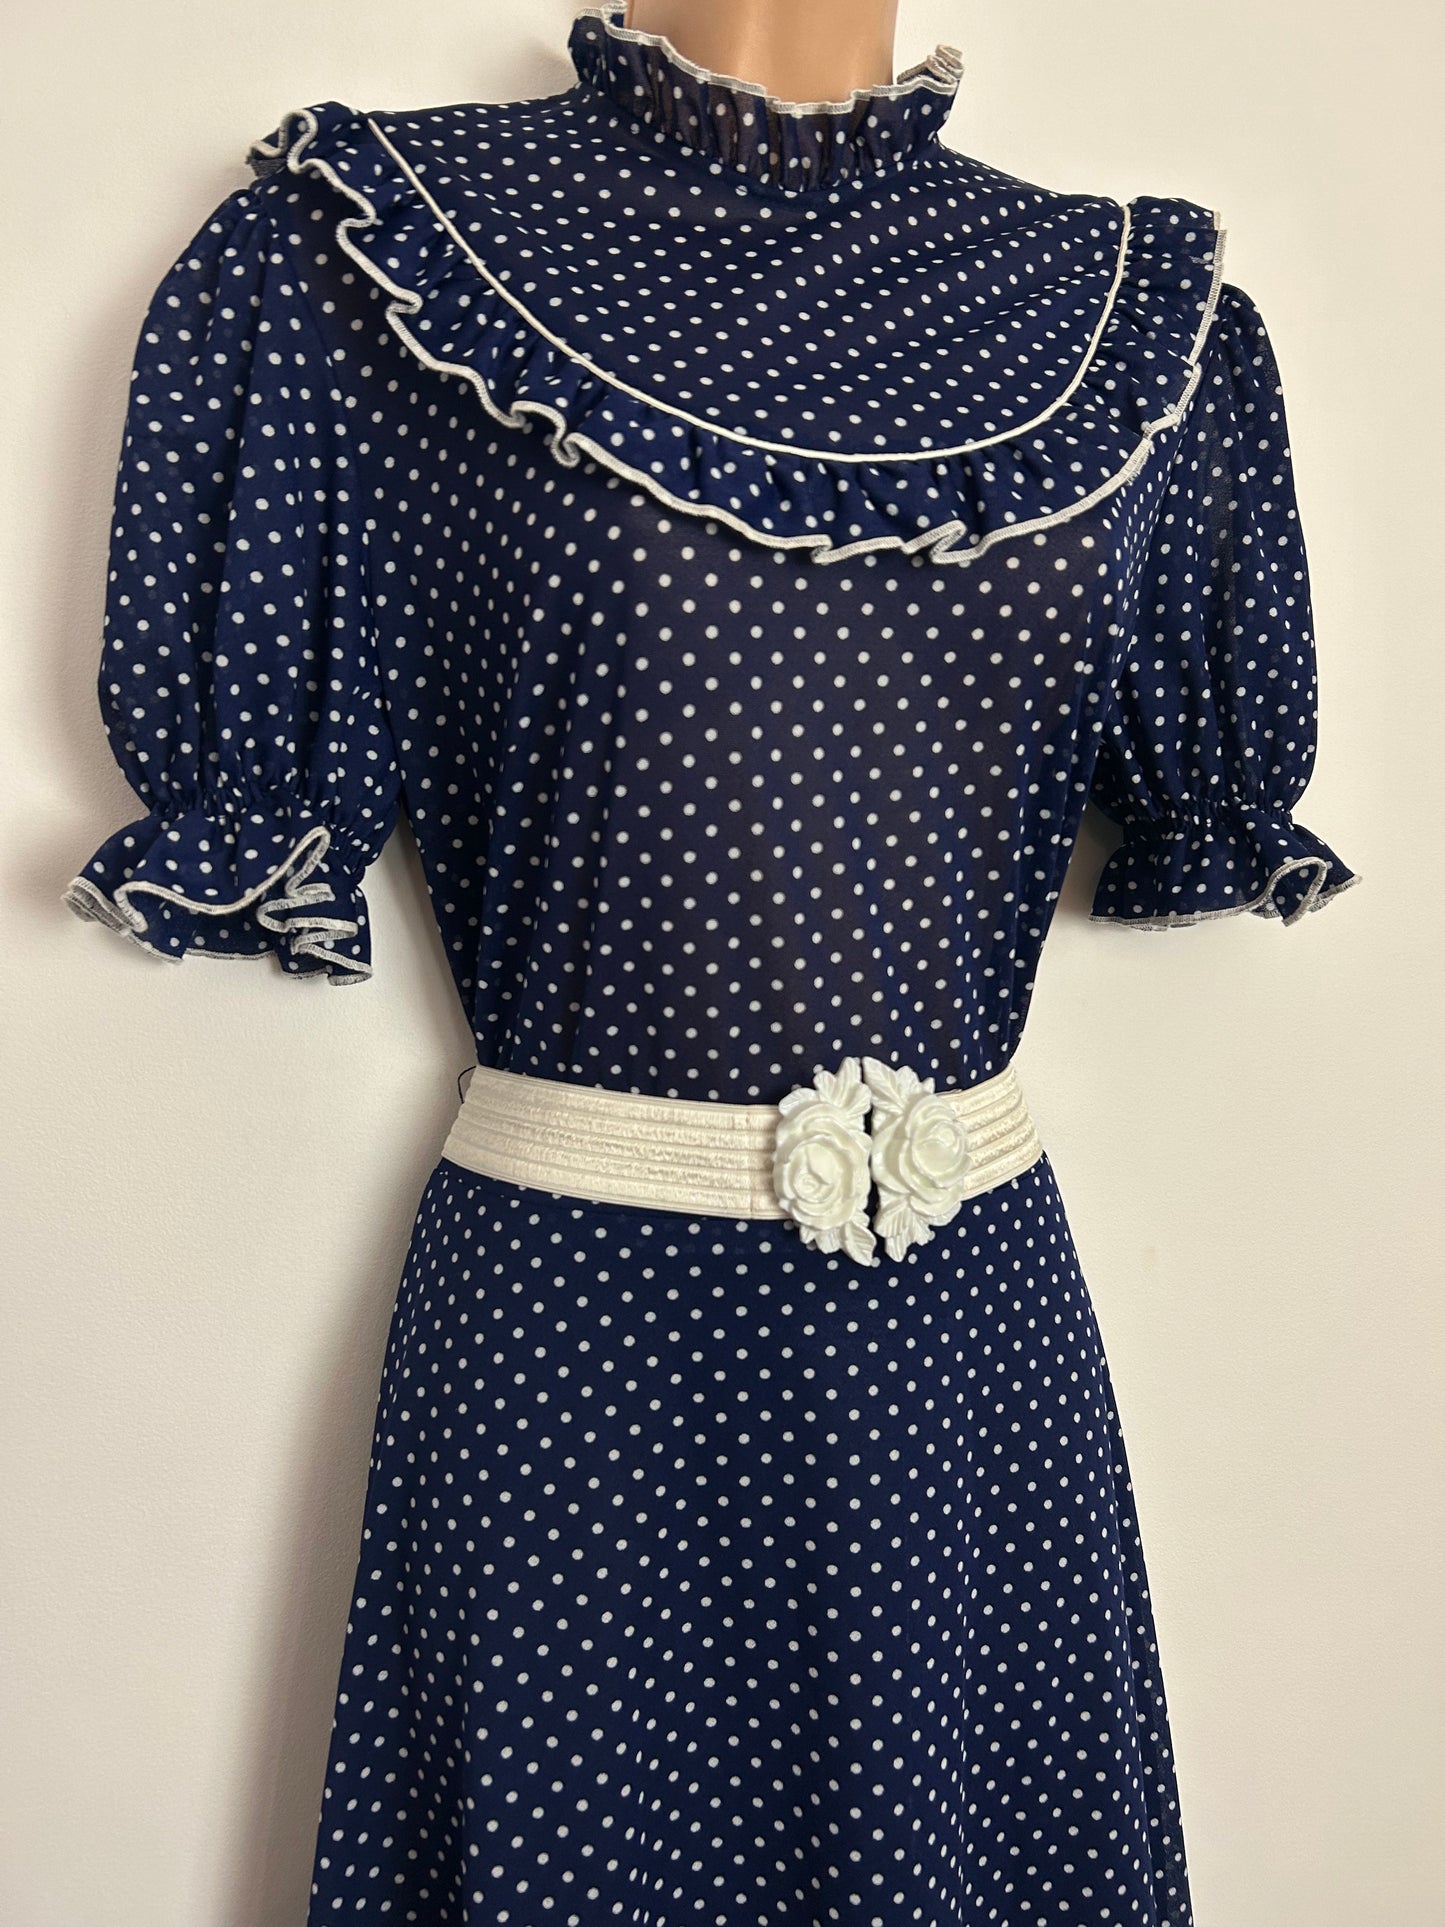 Vintage 1970s UK Size 12-14 Navy Blue & White Polka Dot Ruffle Trim Elasticated Belt Prairie Boho Maxi Dress